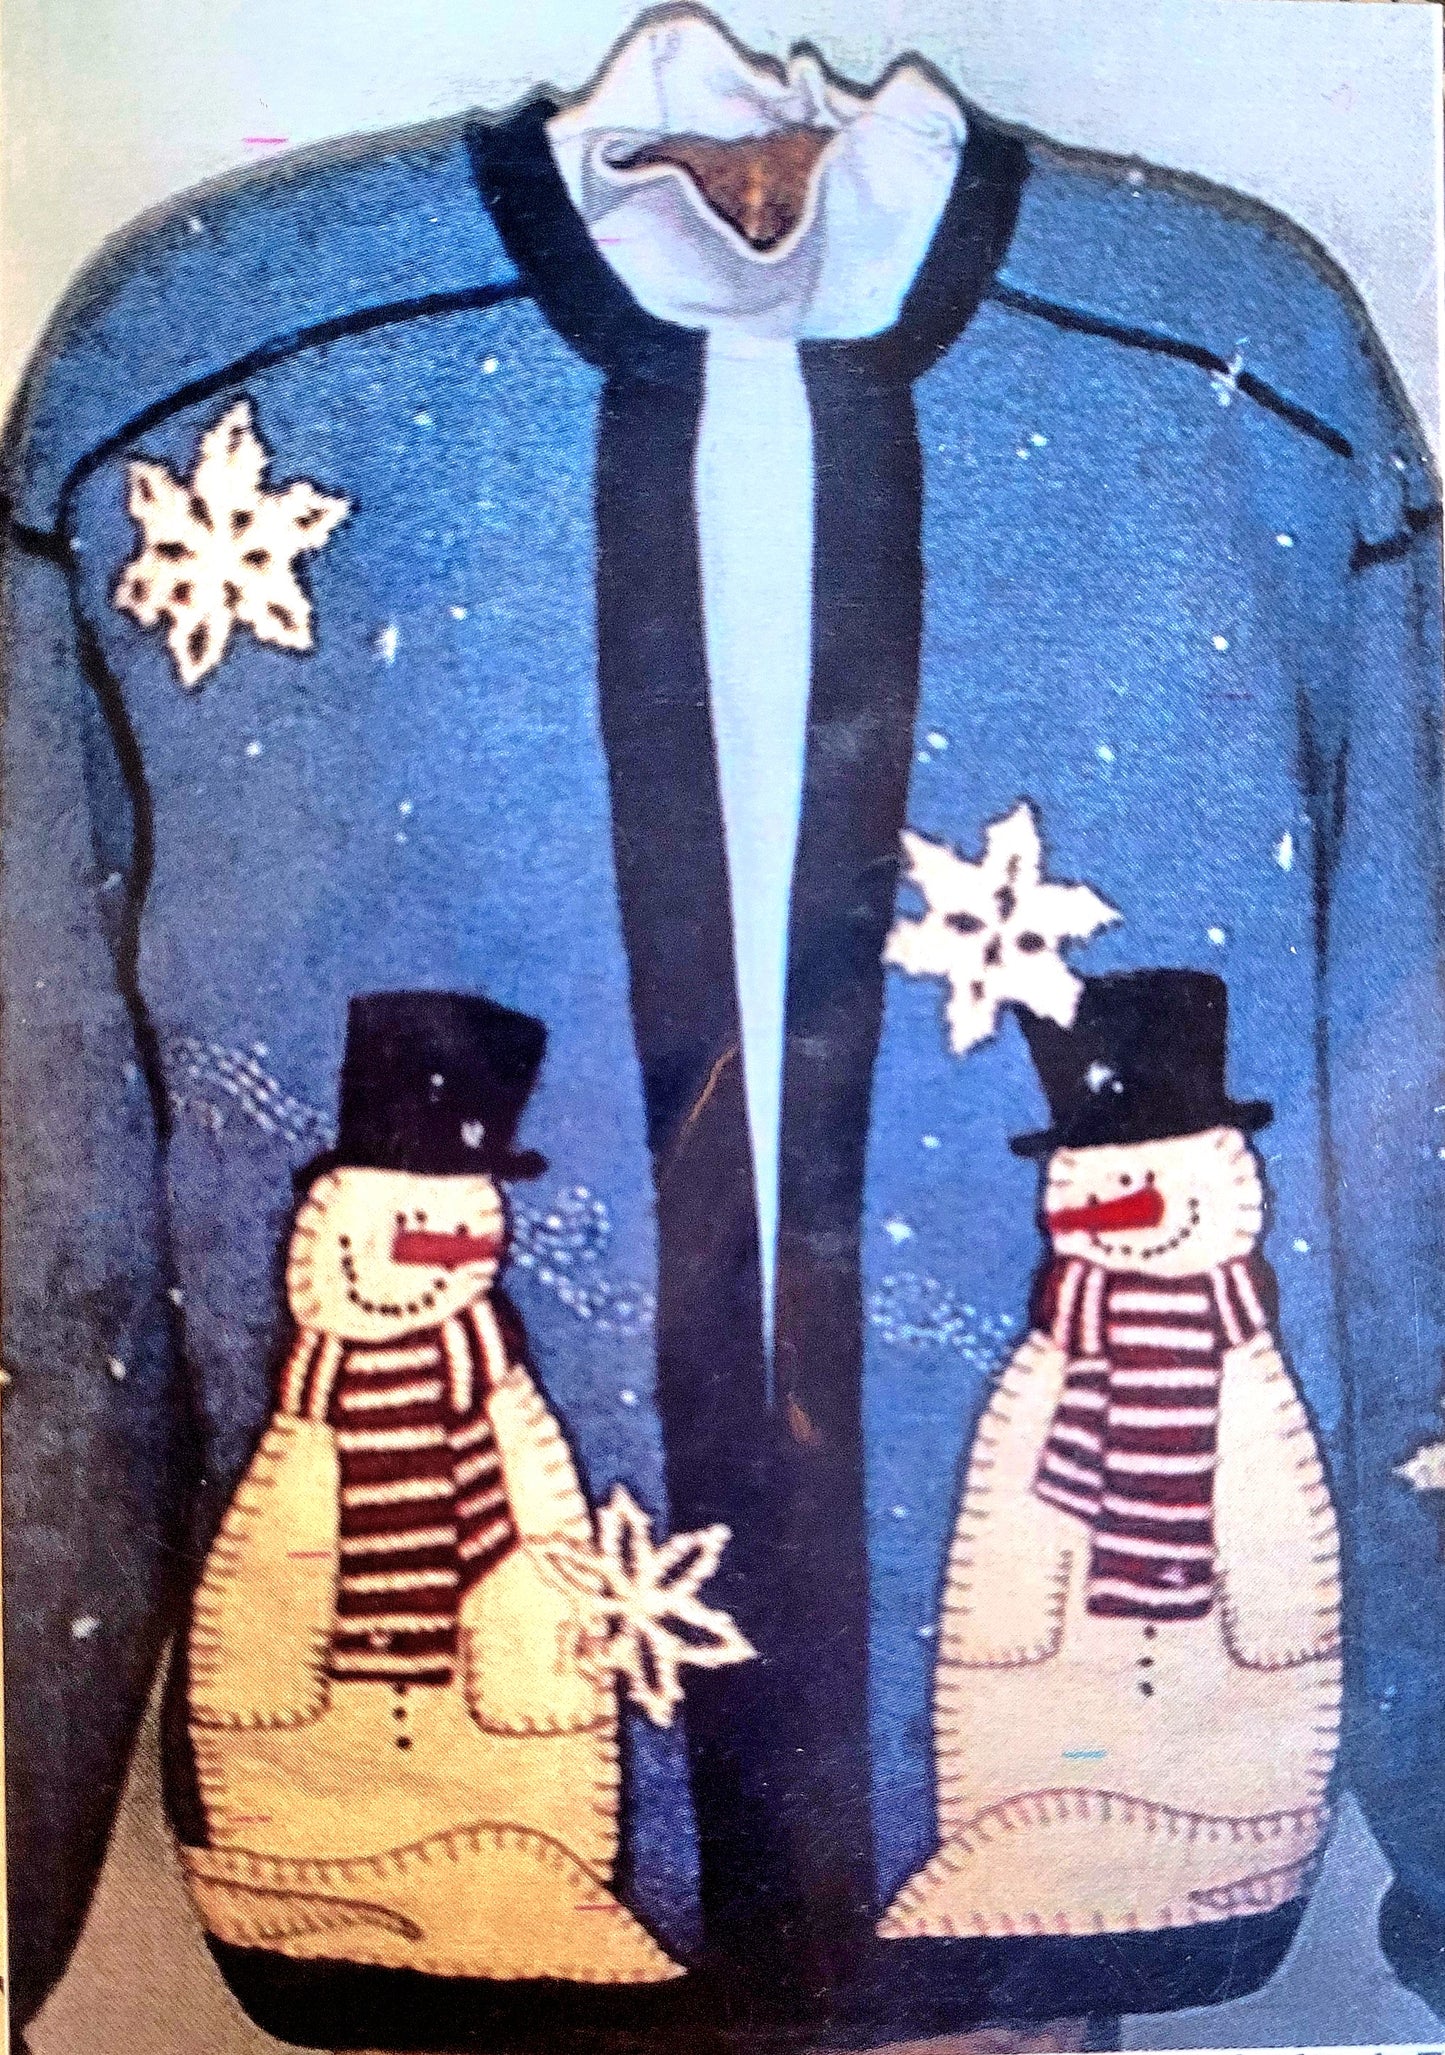 “Snow Days” Jacket Pattern – Dolls ‘n Stuff #060 Embroidery Snowman